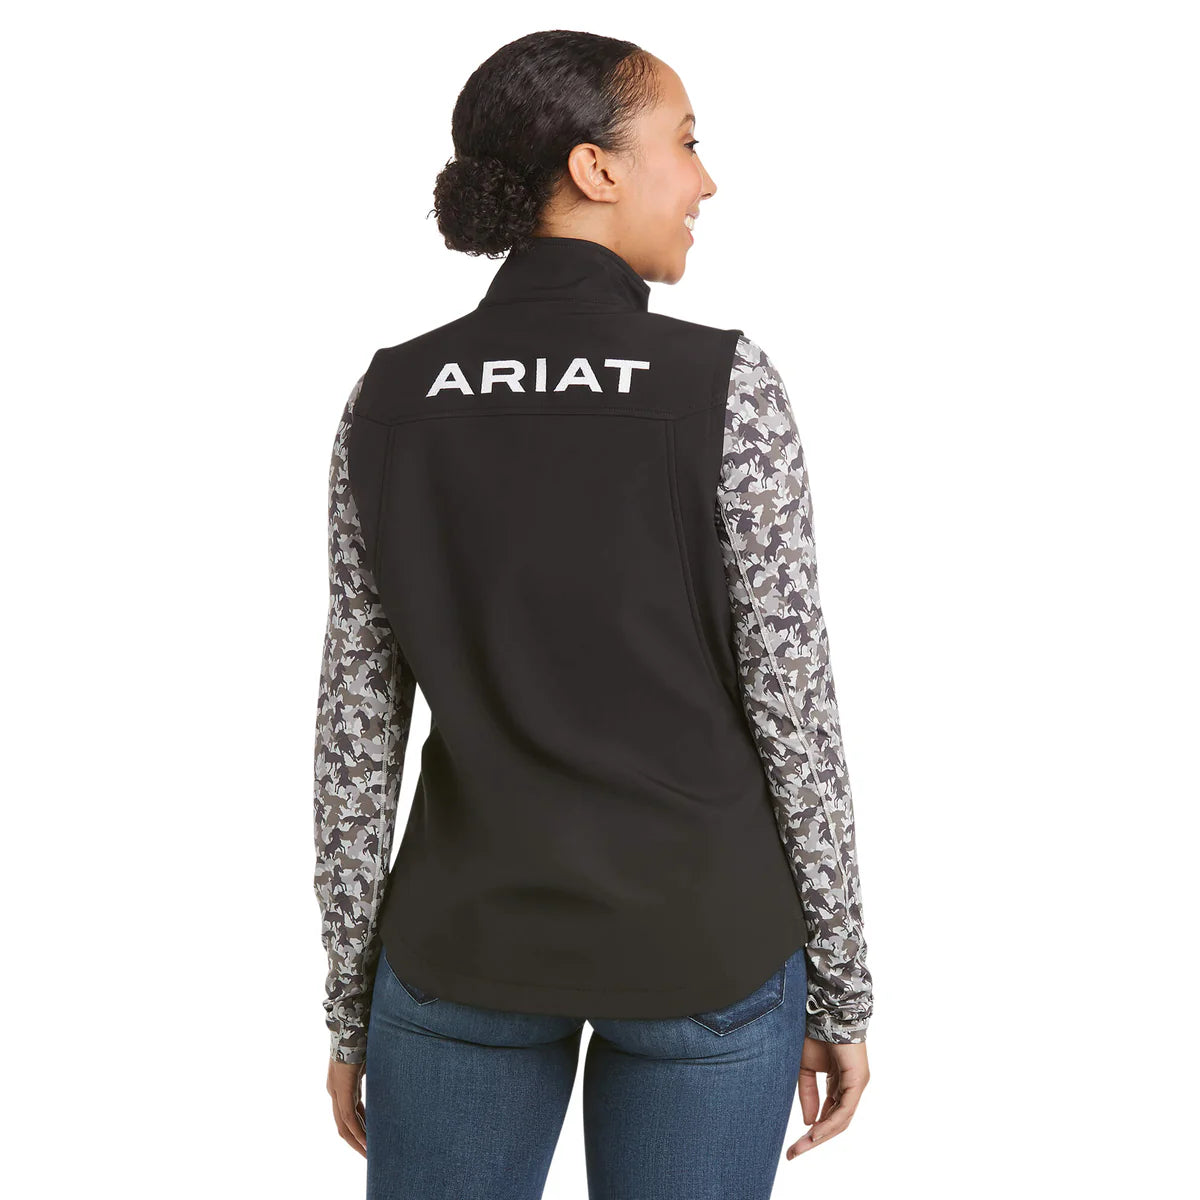 Ariat Wms New Team Softshell Vest Black